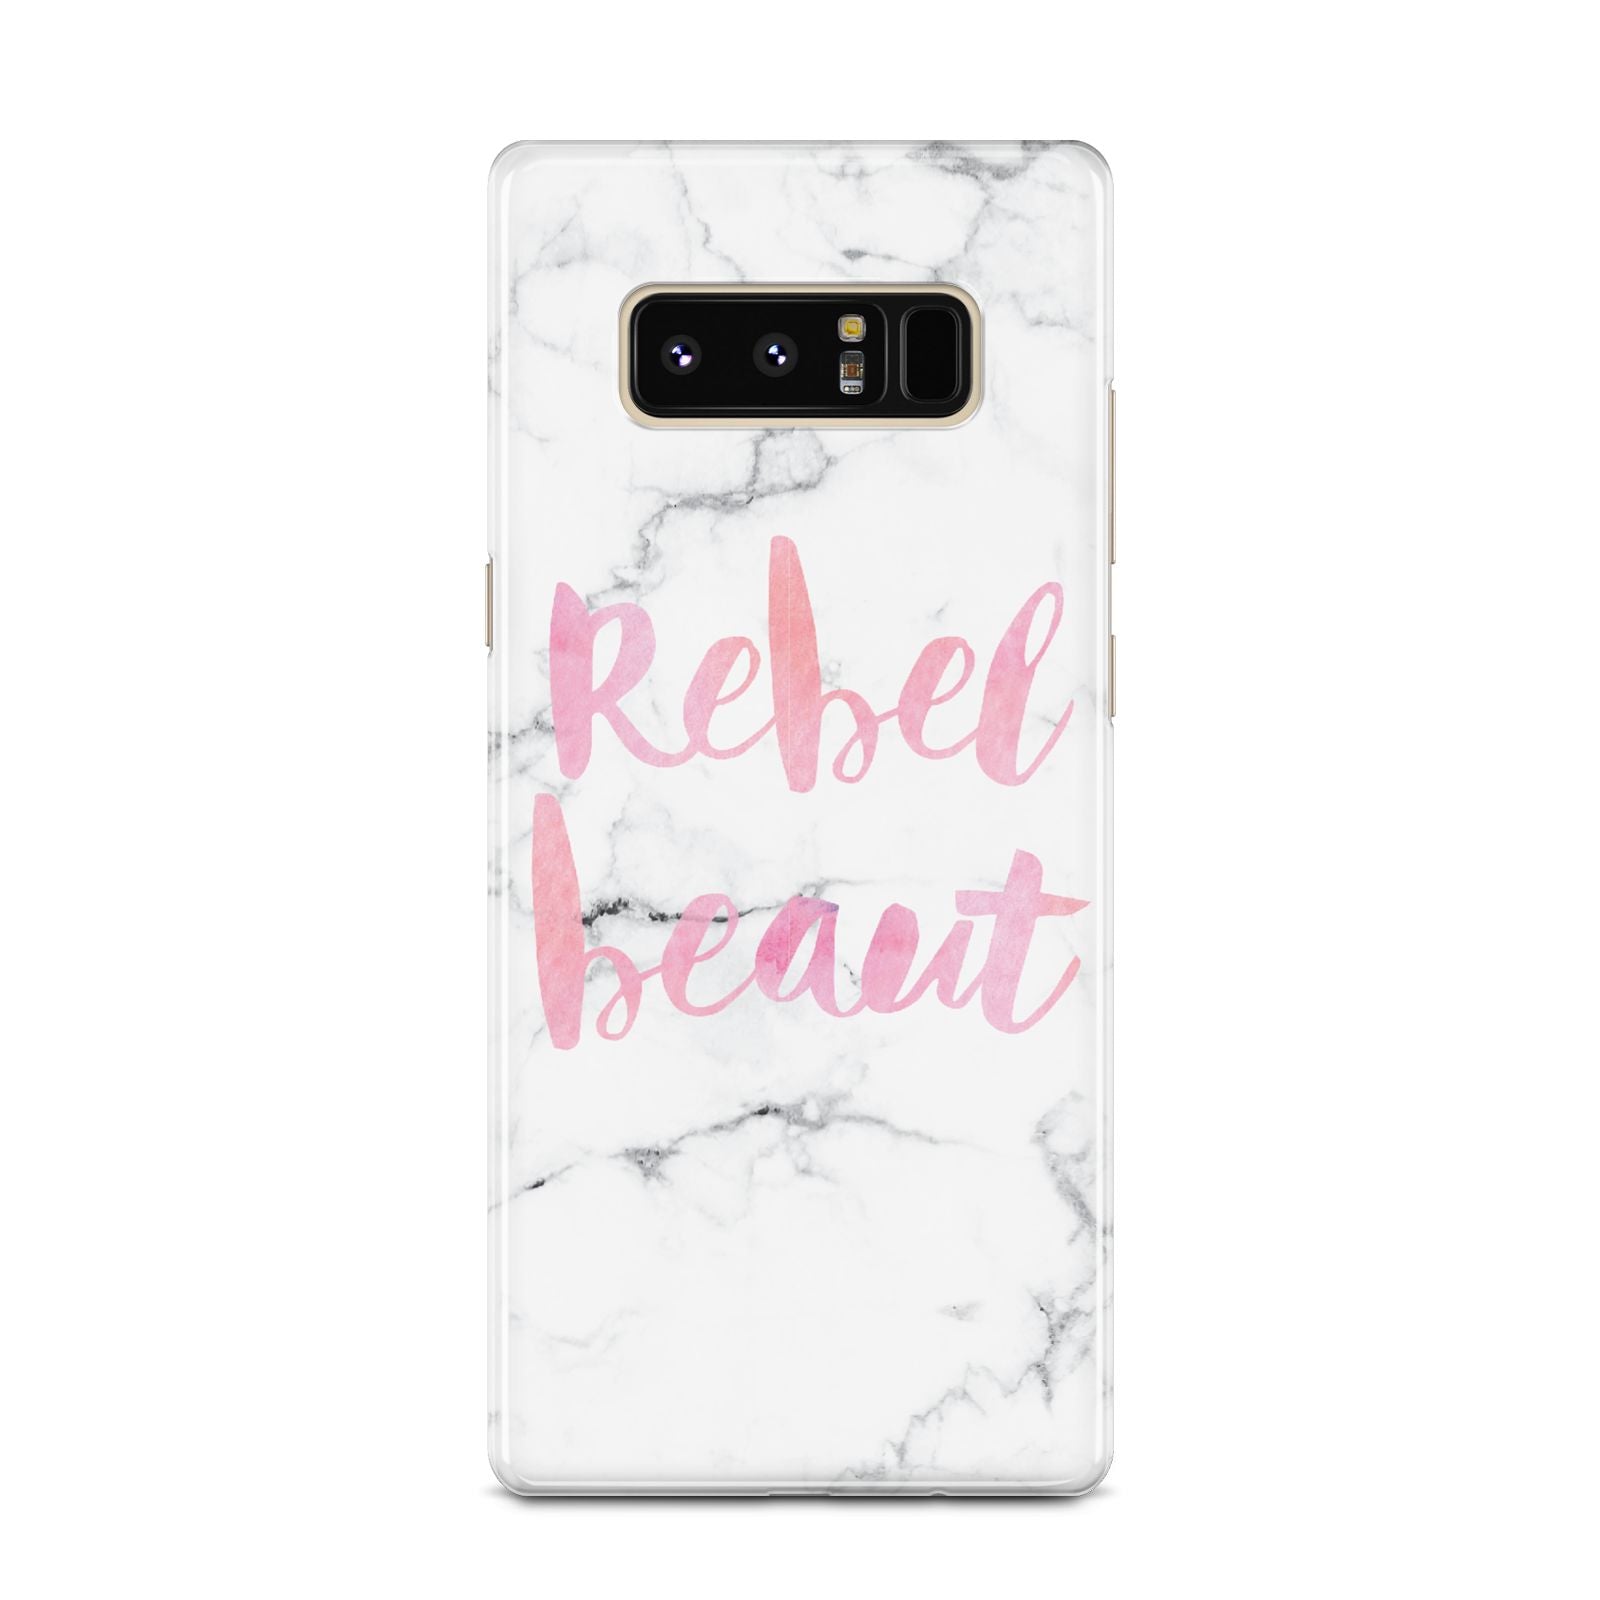 Rebel Heart Grey Marble Effect Samsung Galaxy Note 8 Case